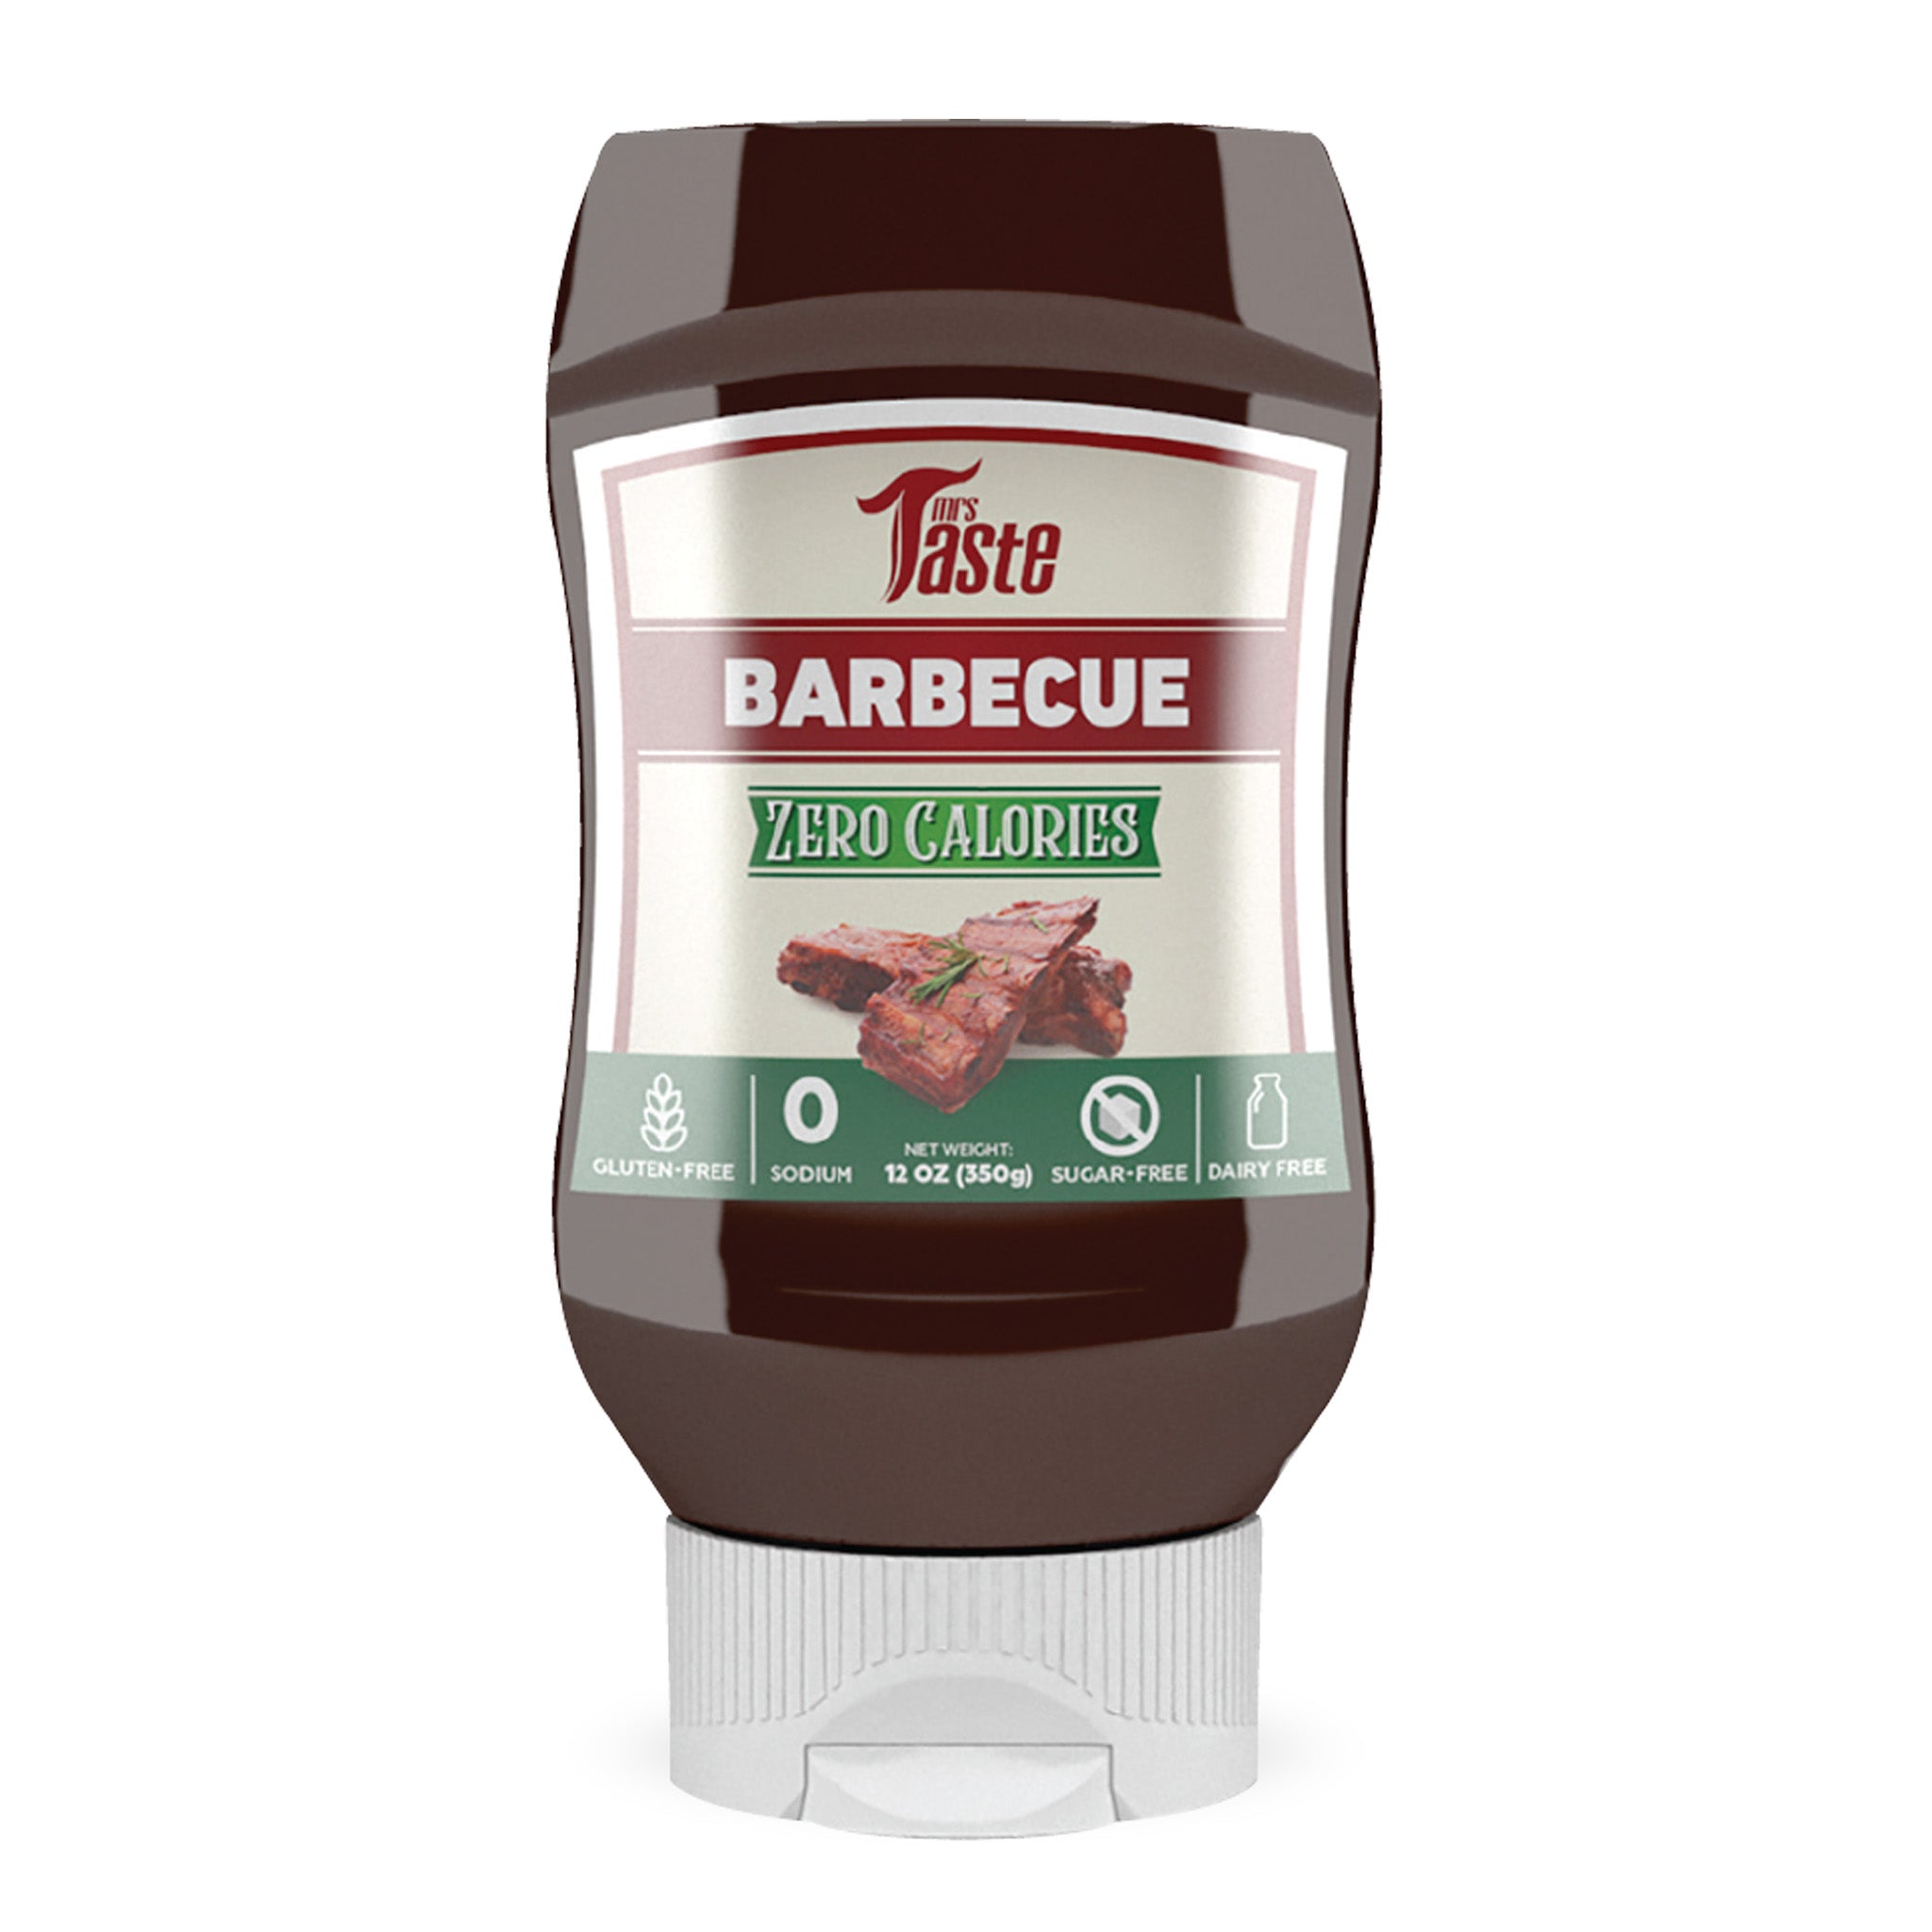 Mrs. Taste Barbecue Sauce (350g)